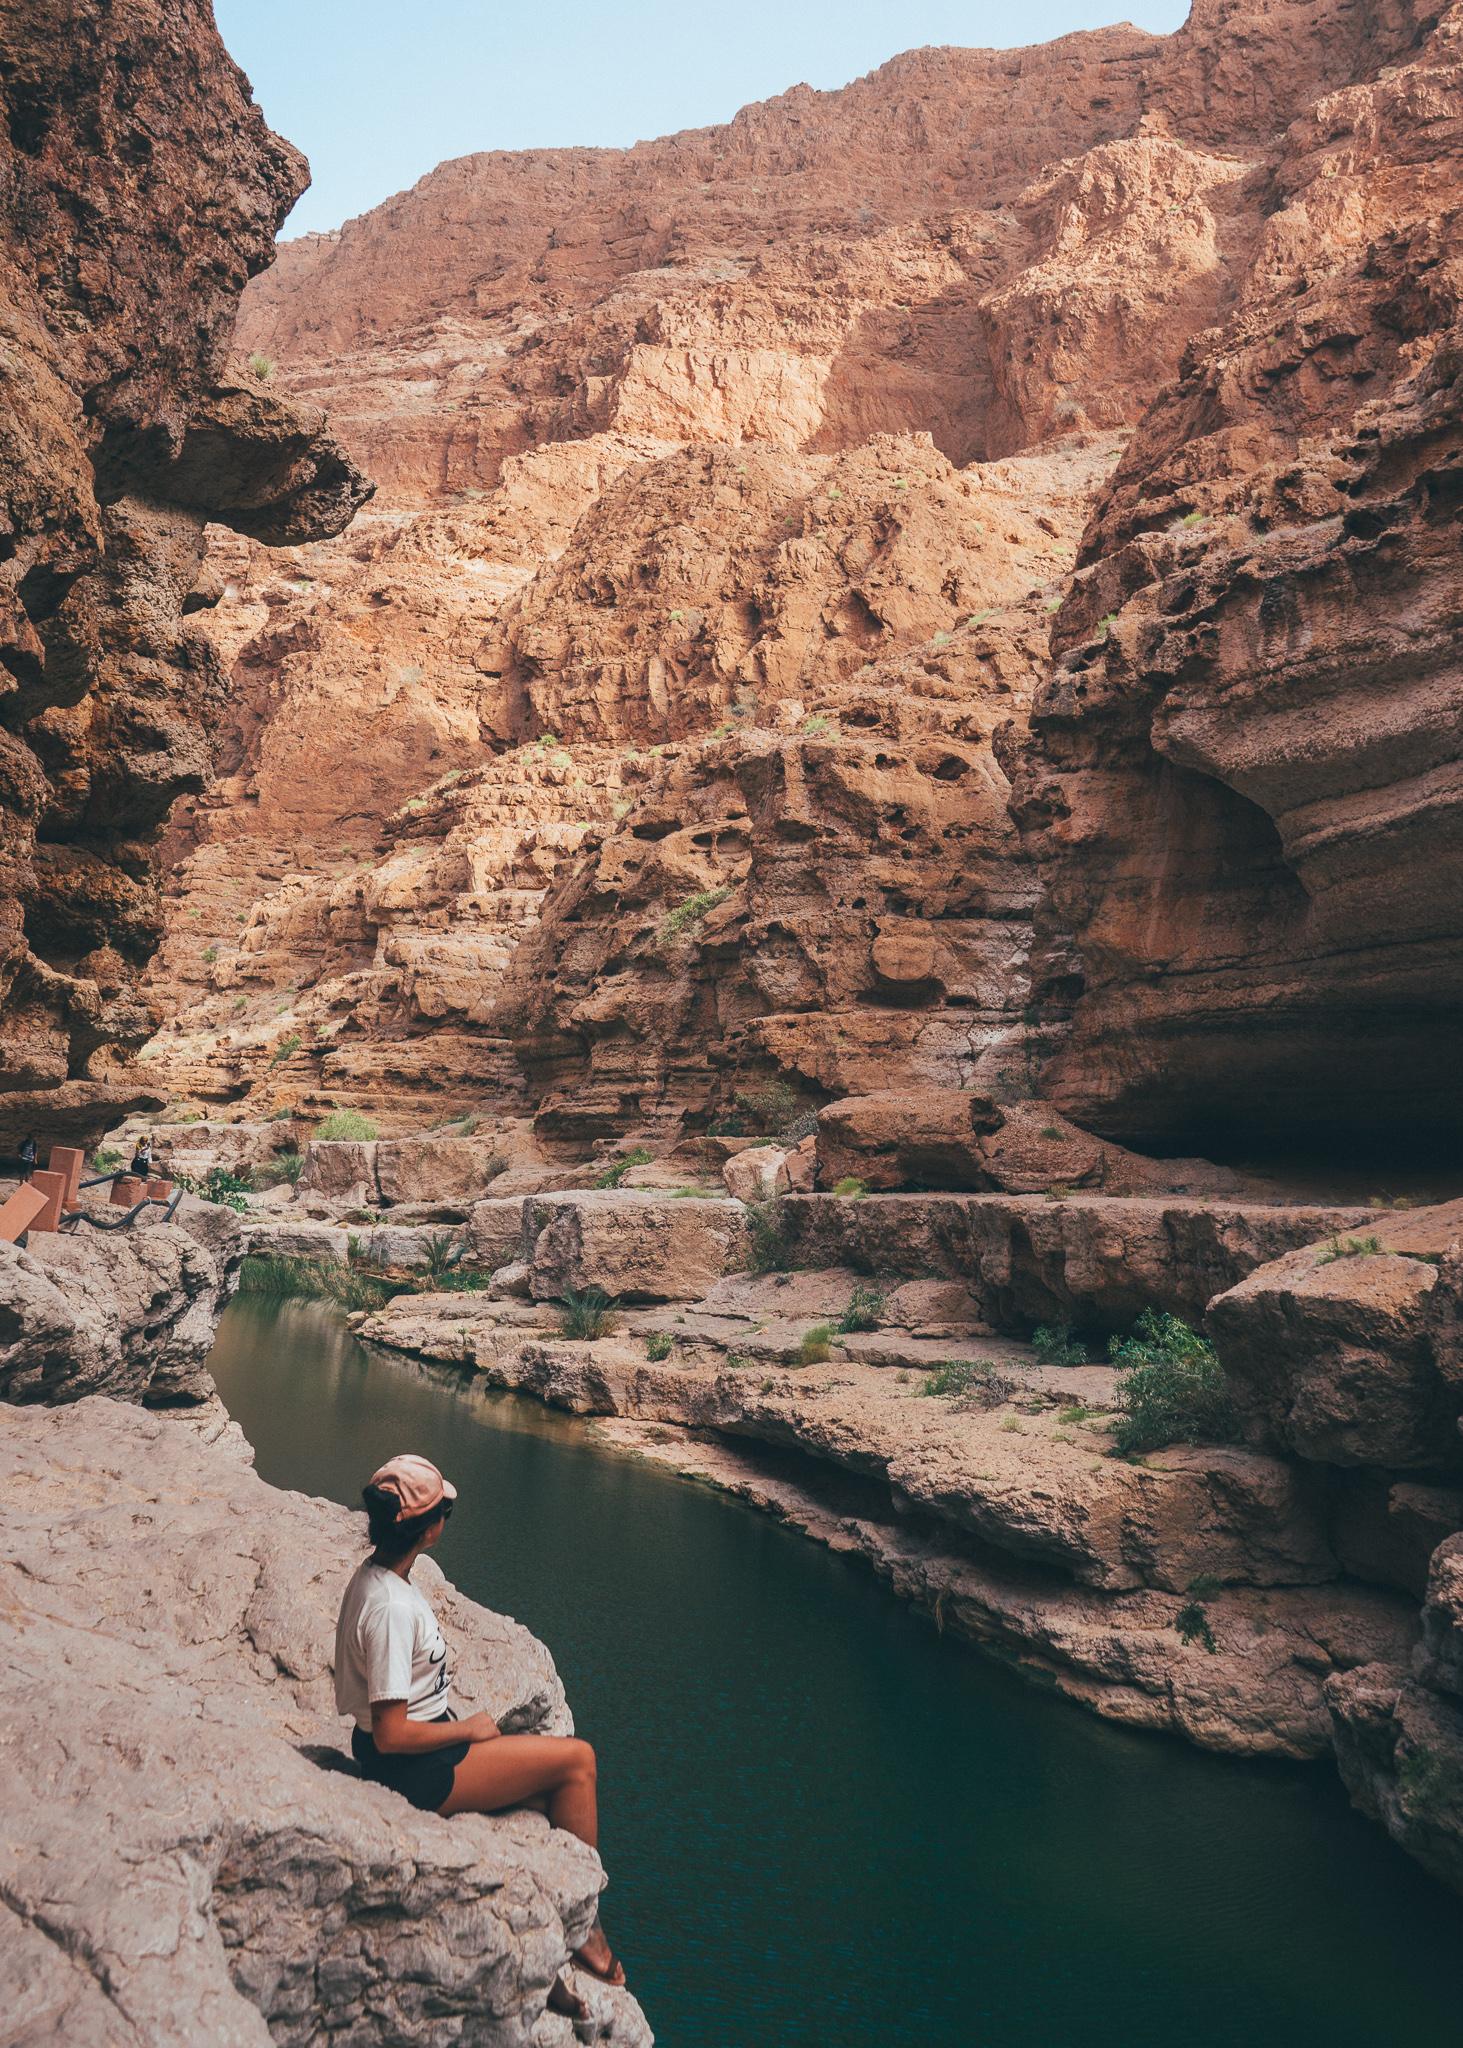 A girl sitting on a rocky ledge in Wadi Shab in Oman